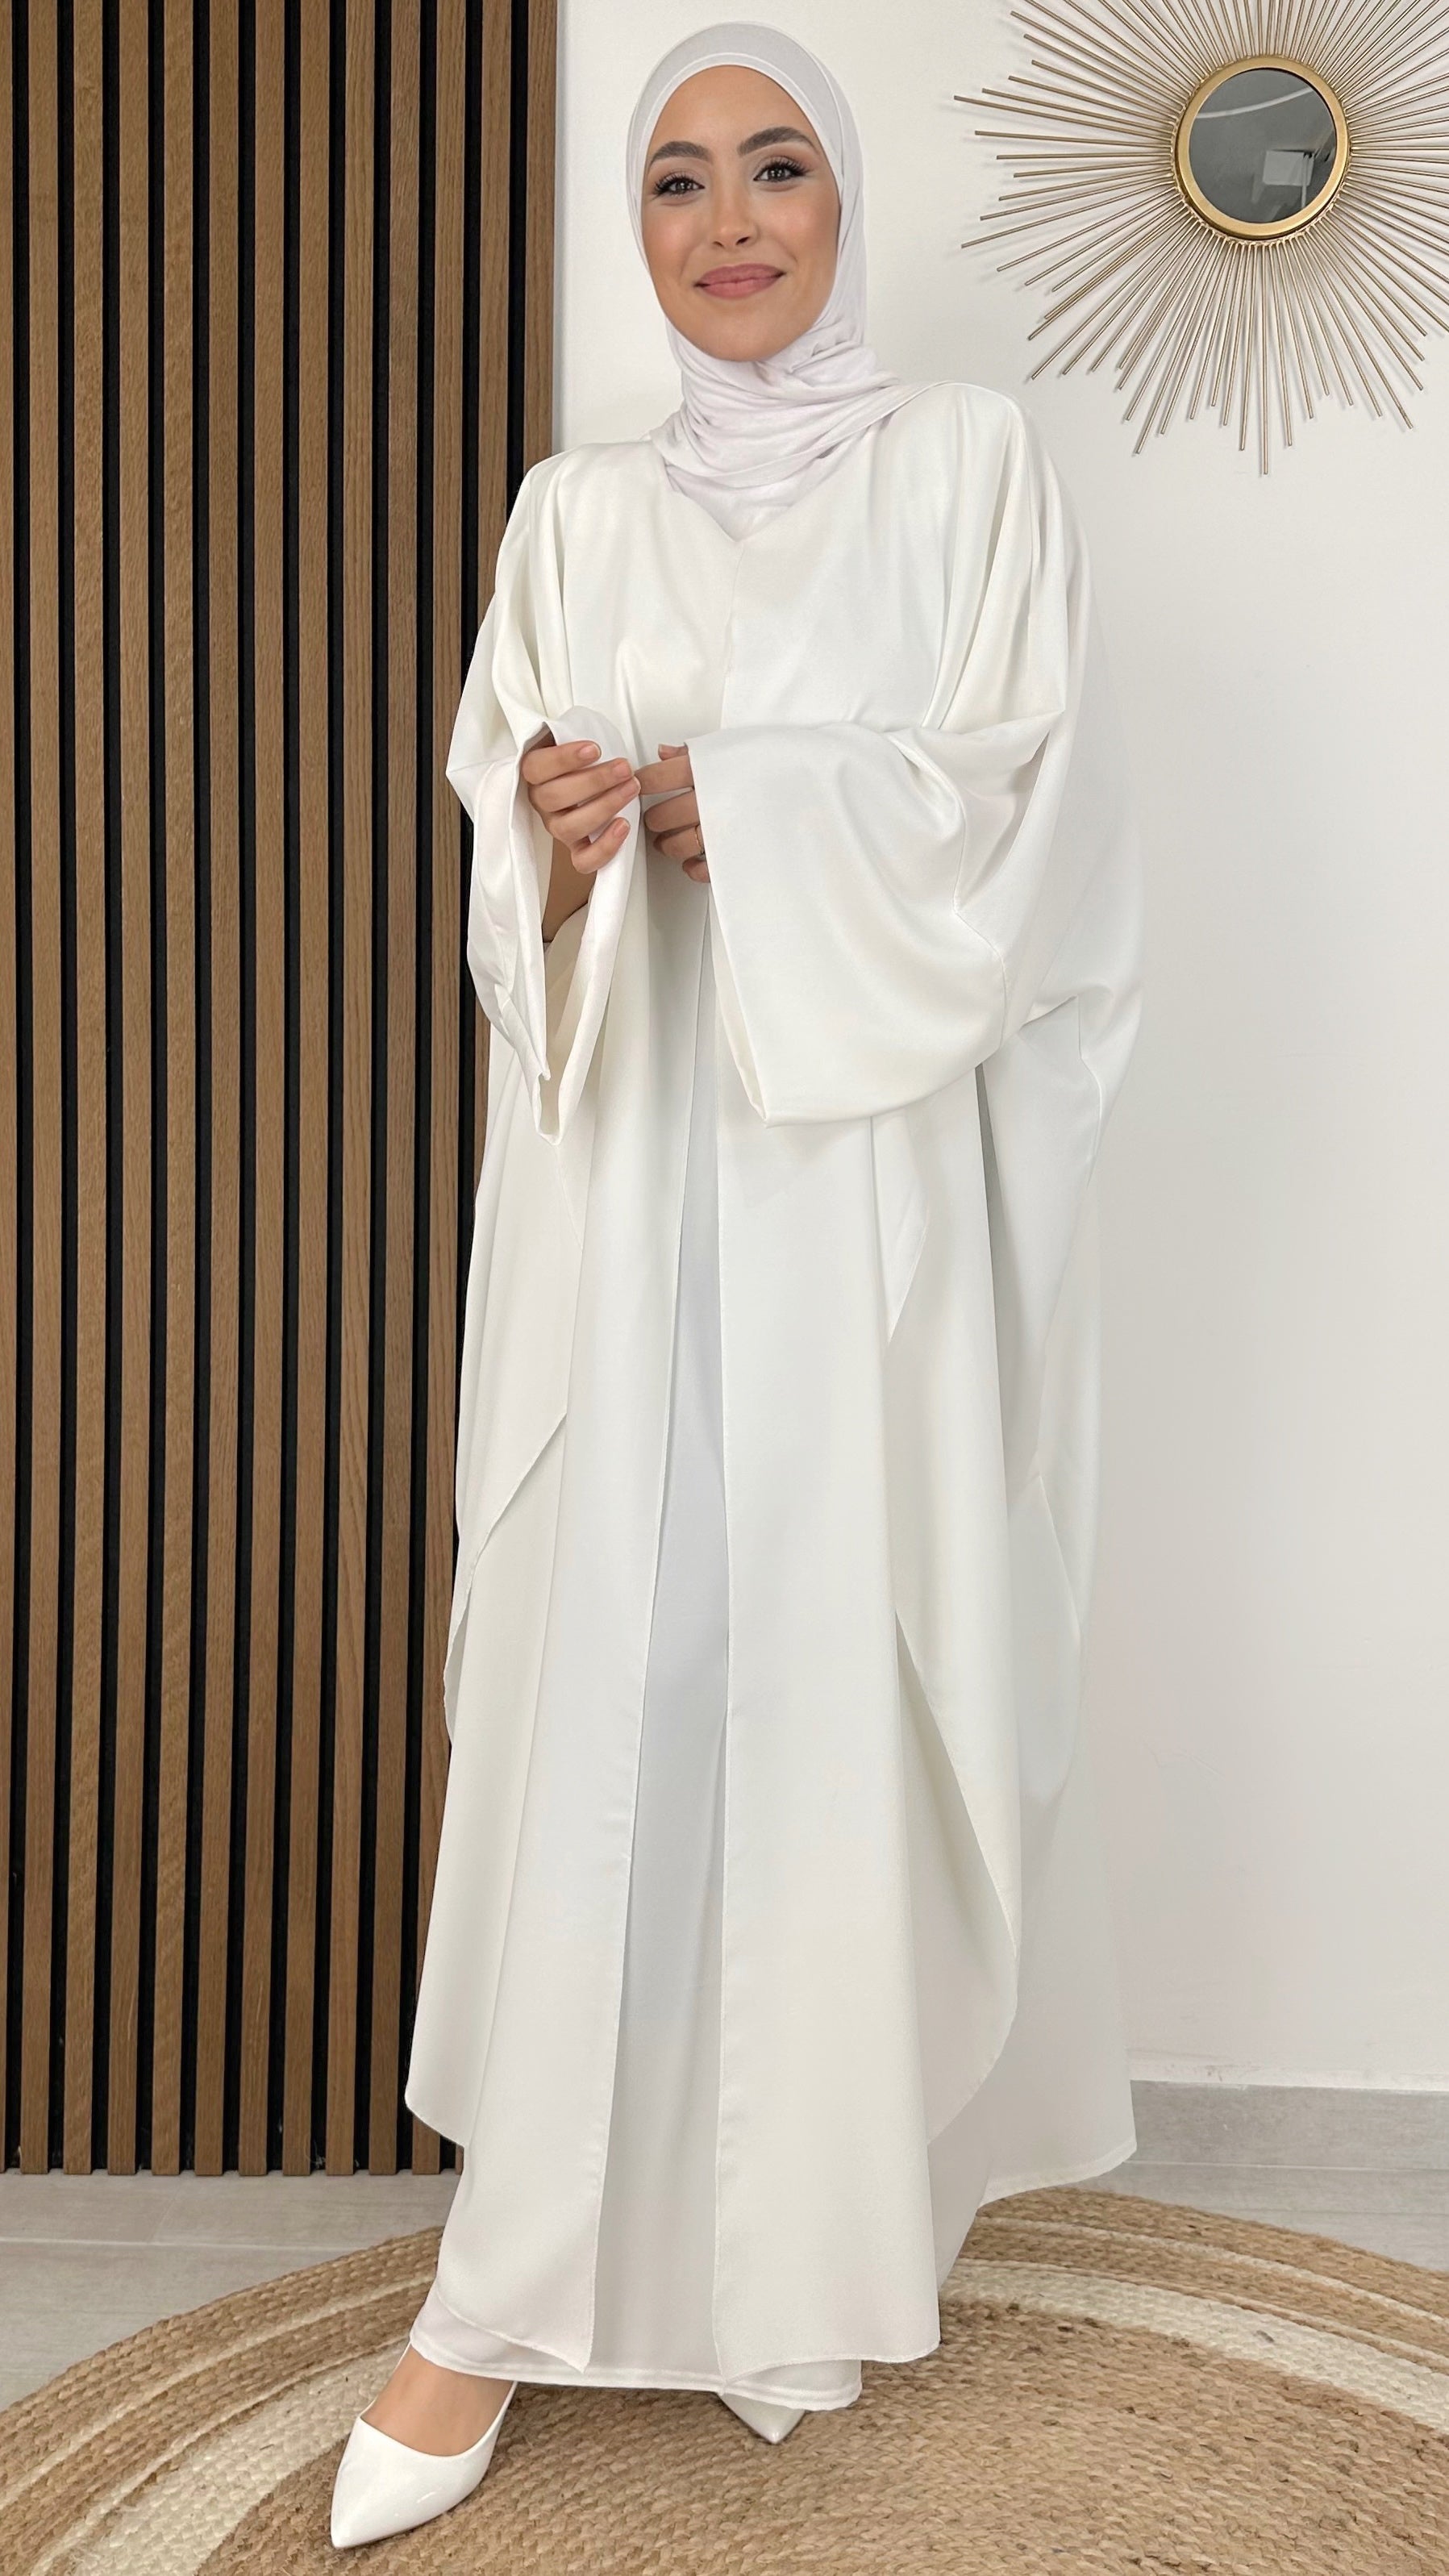 Abaya Layers- Hijab Paradise - Donna musulmana - hijab bianco -donna elegante- omra outfit - hajj outfit - donna musulmana - sorriso  -tacchi bianchi